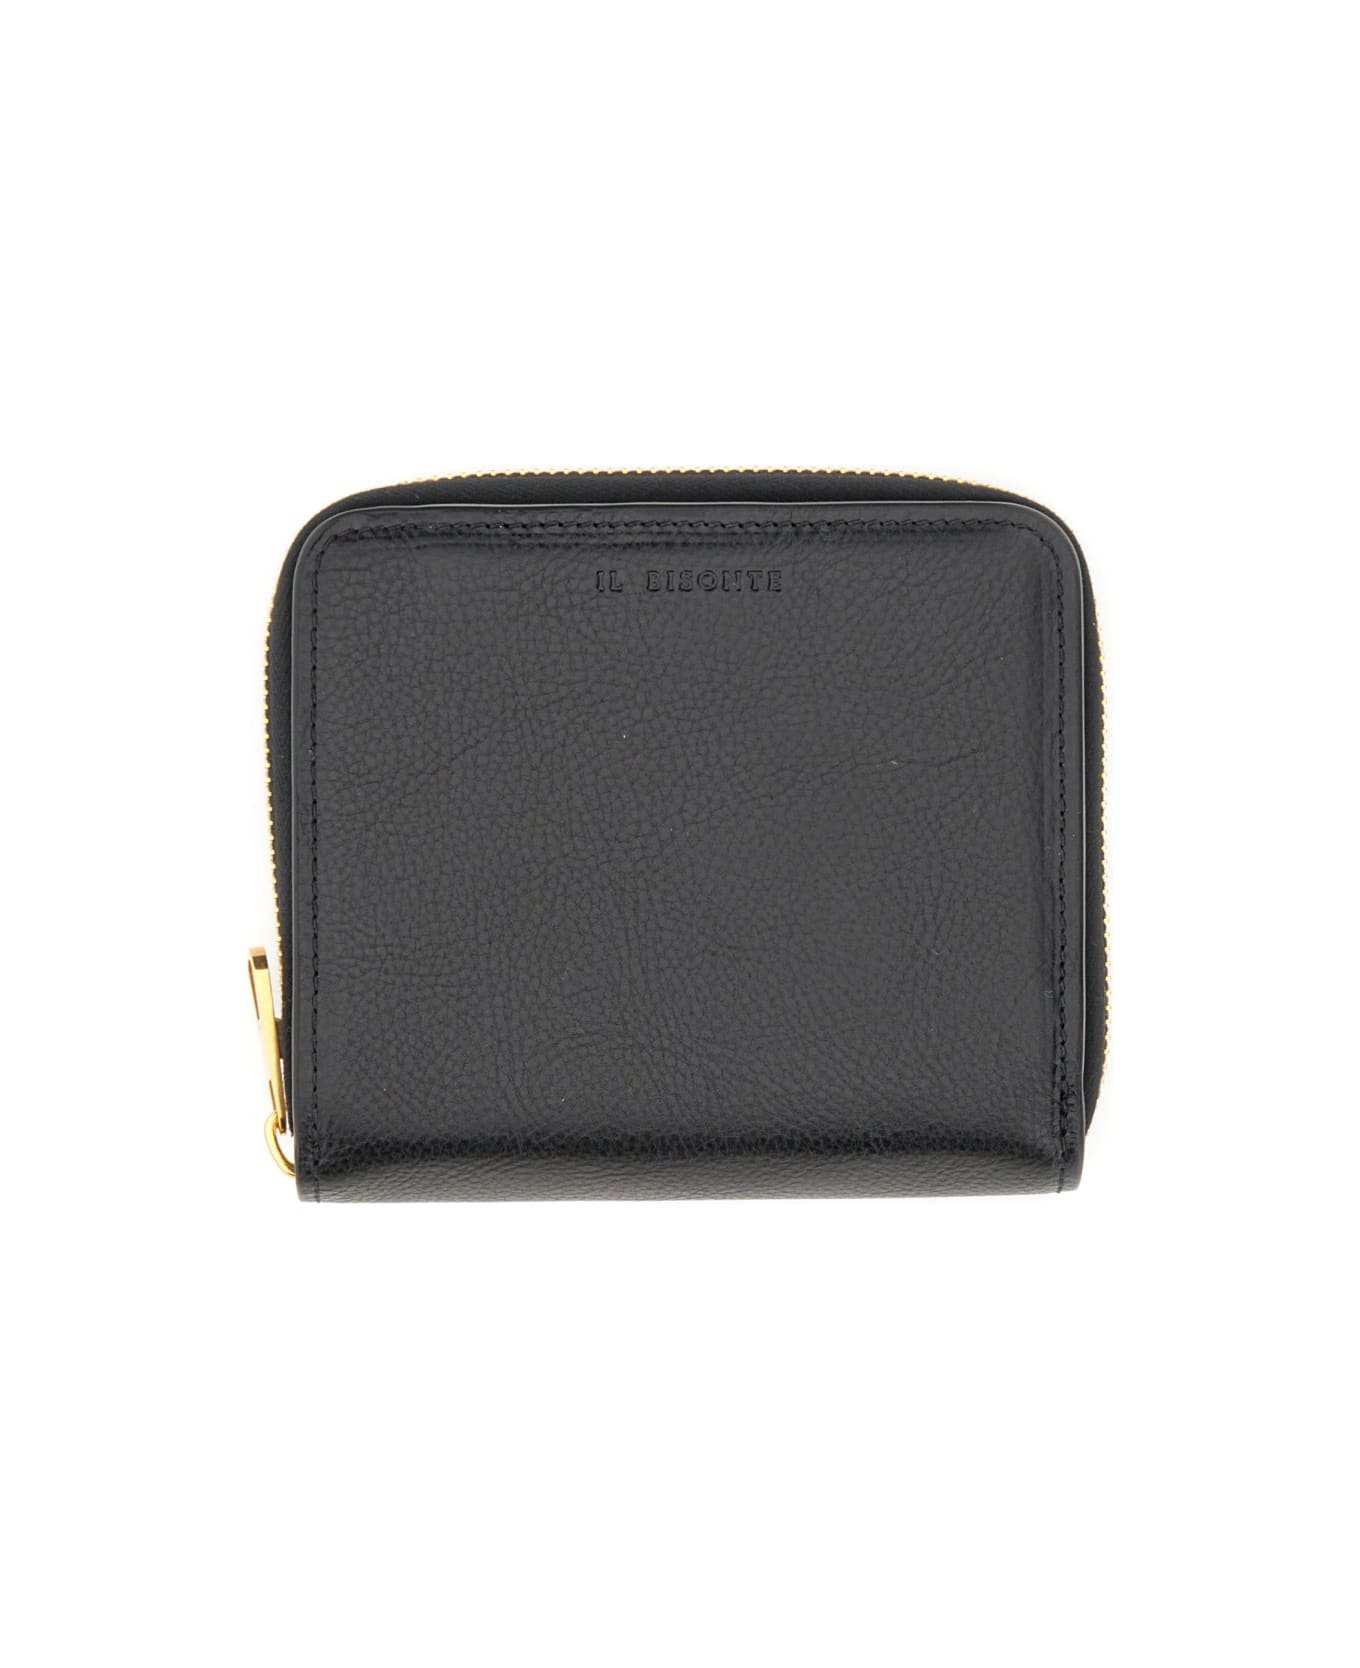 Il Bisonte Leather Wallet - BLACK